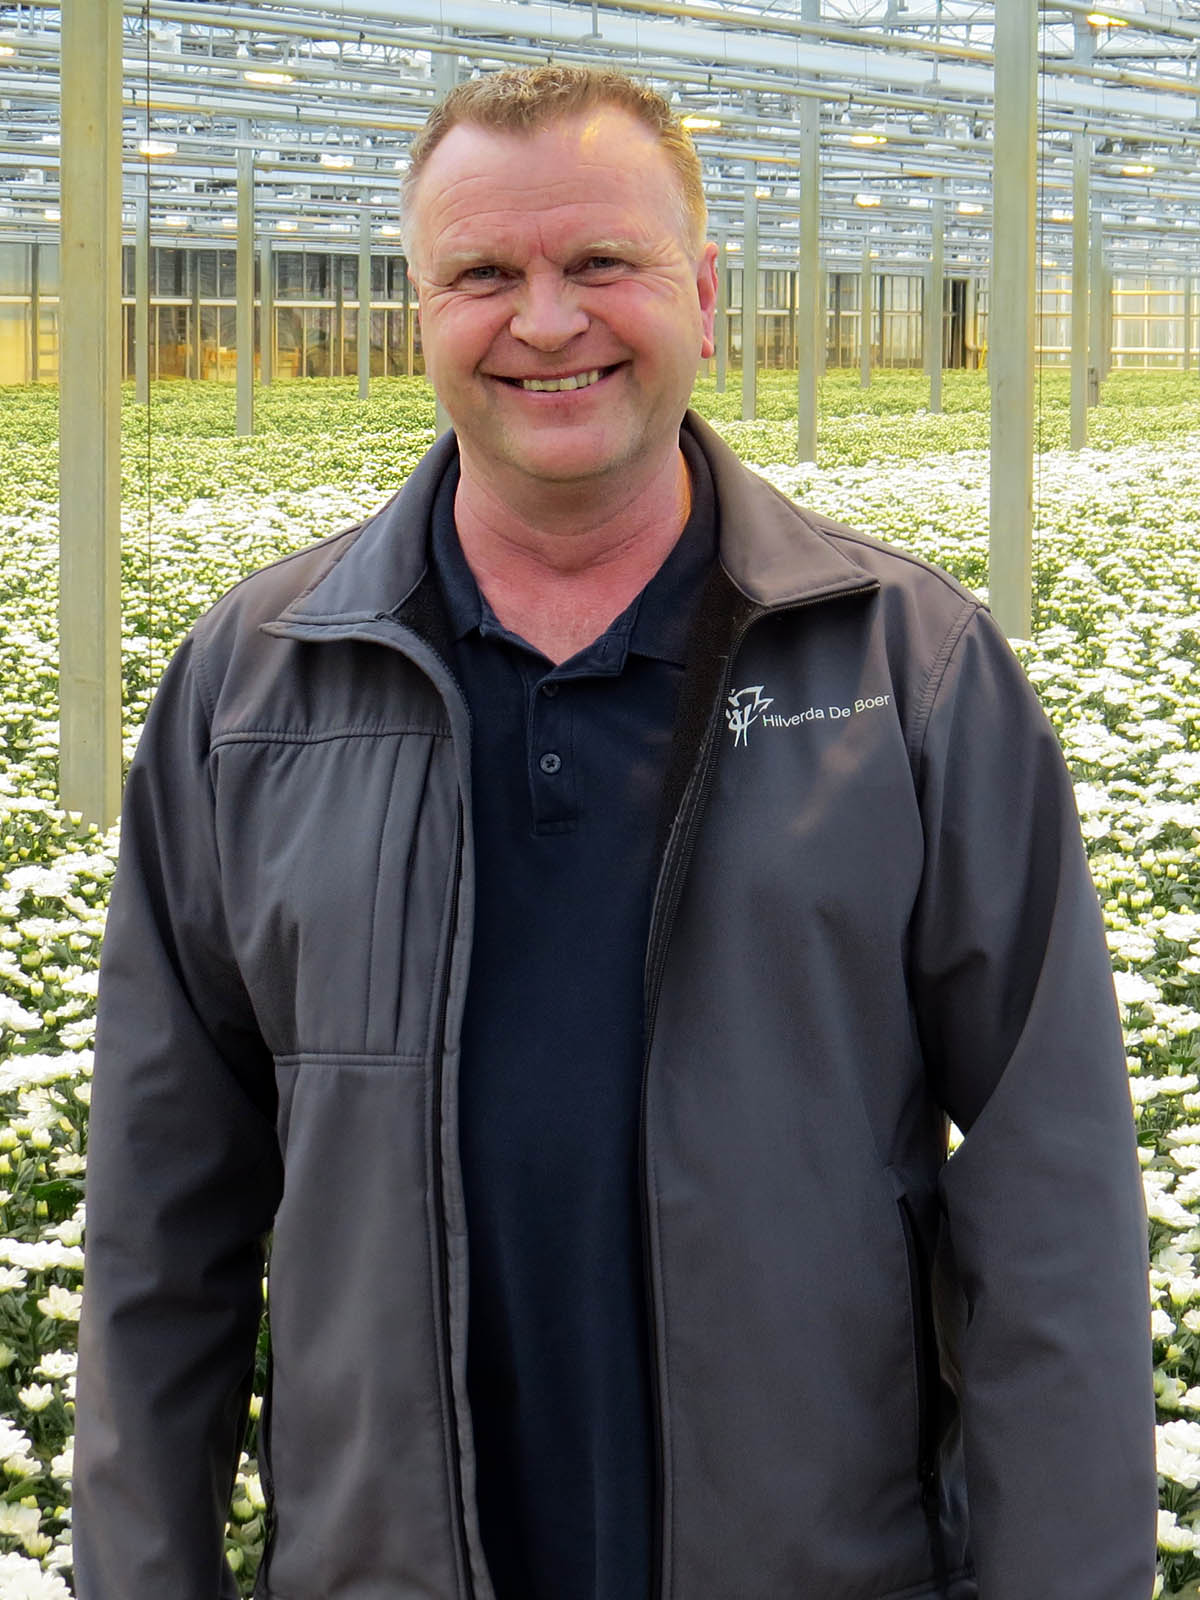 Hilverda De Boer Embraces Chrysanthemum Ilonka 01